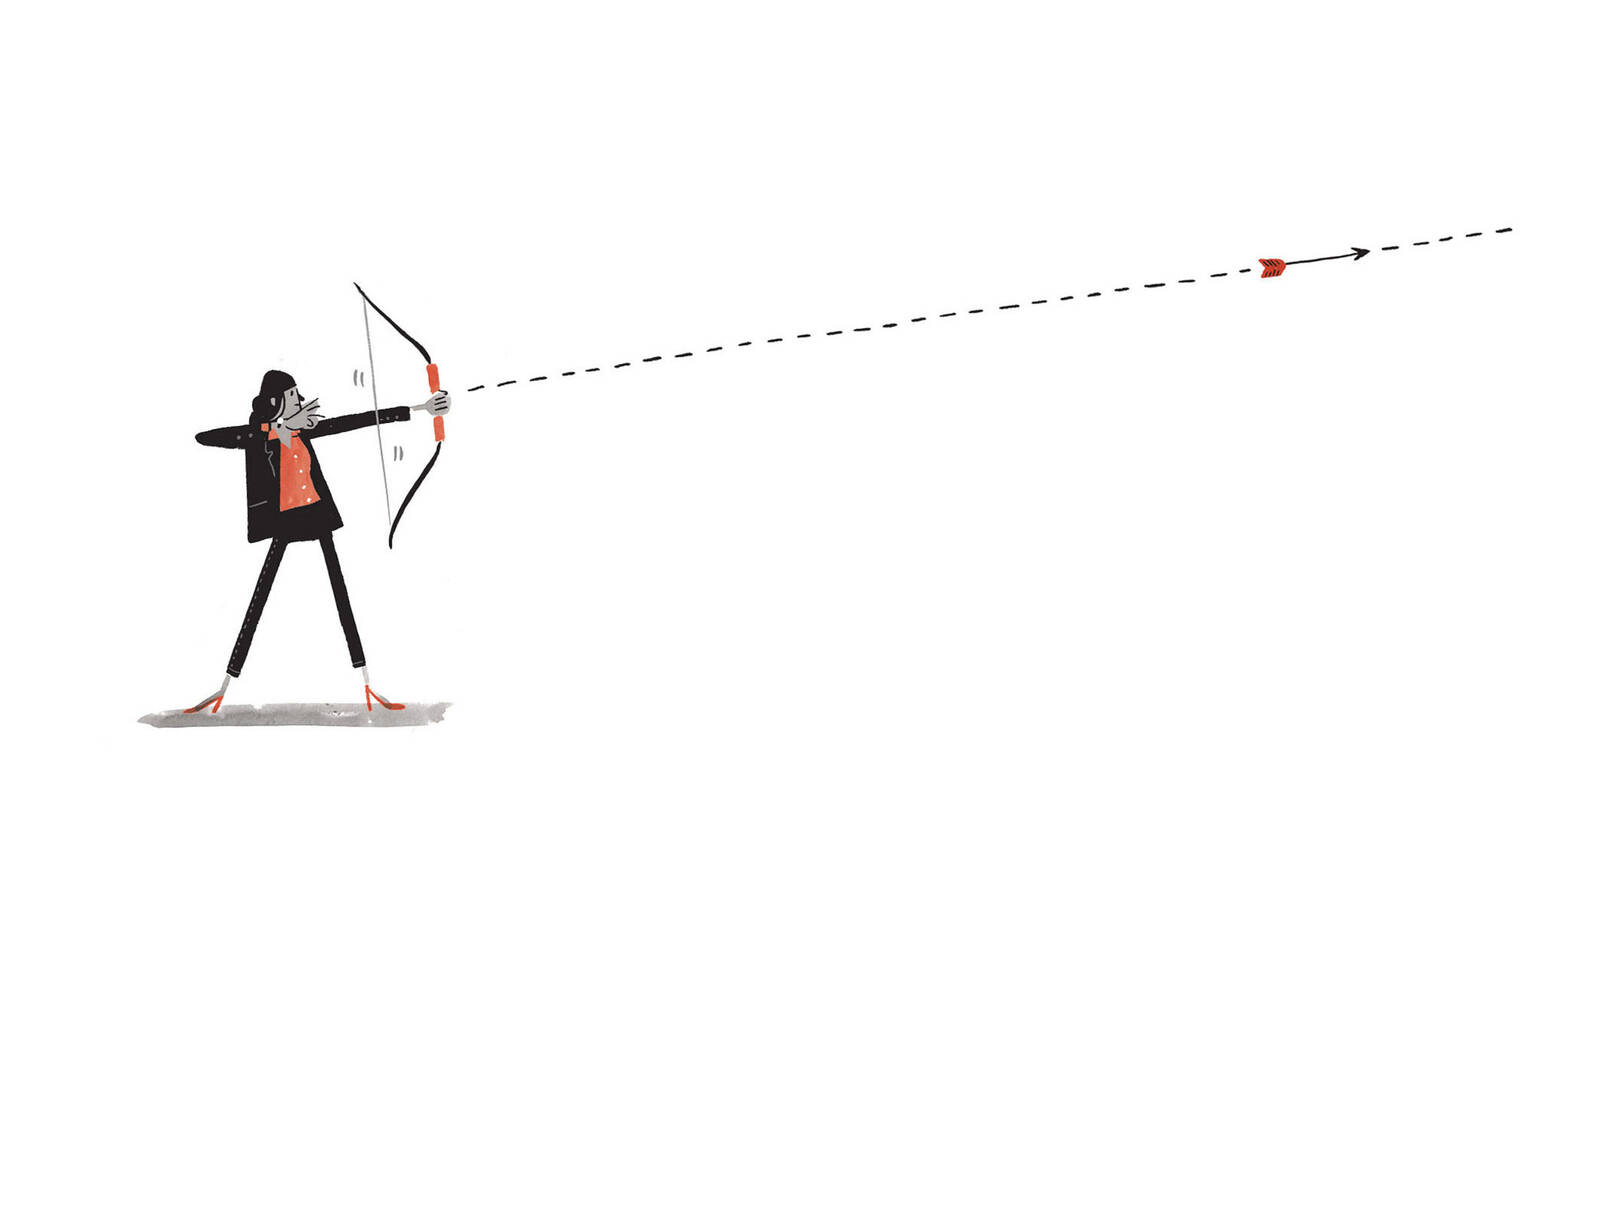 Woman shoots arrow